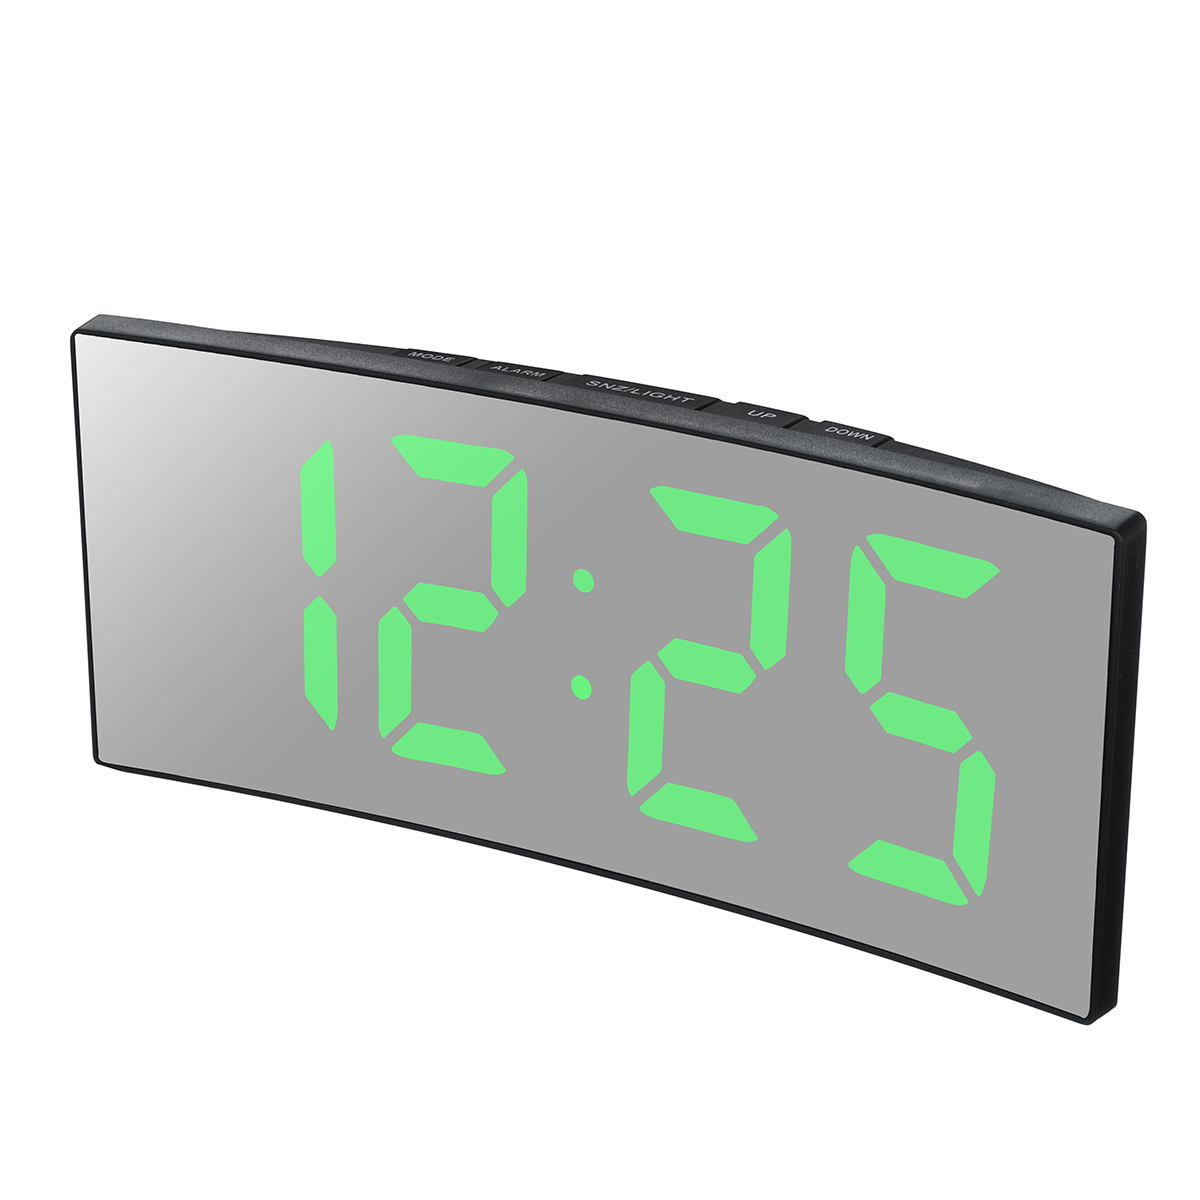 Curved-LED-Digital-Alarm-Clock-Mirror-Table-Display-Temperature-Snooze-USB-Room-1639017-9